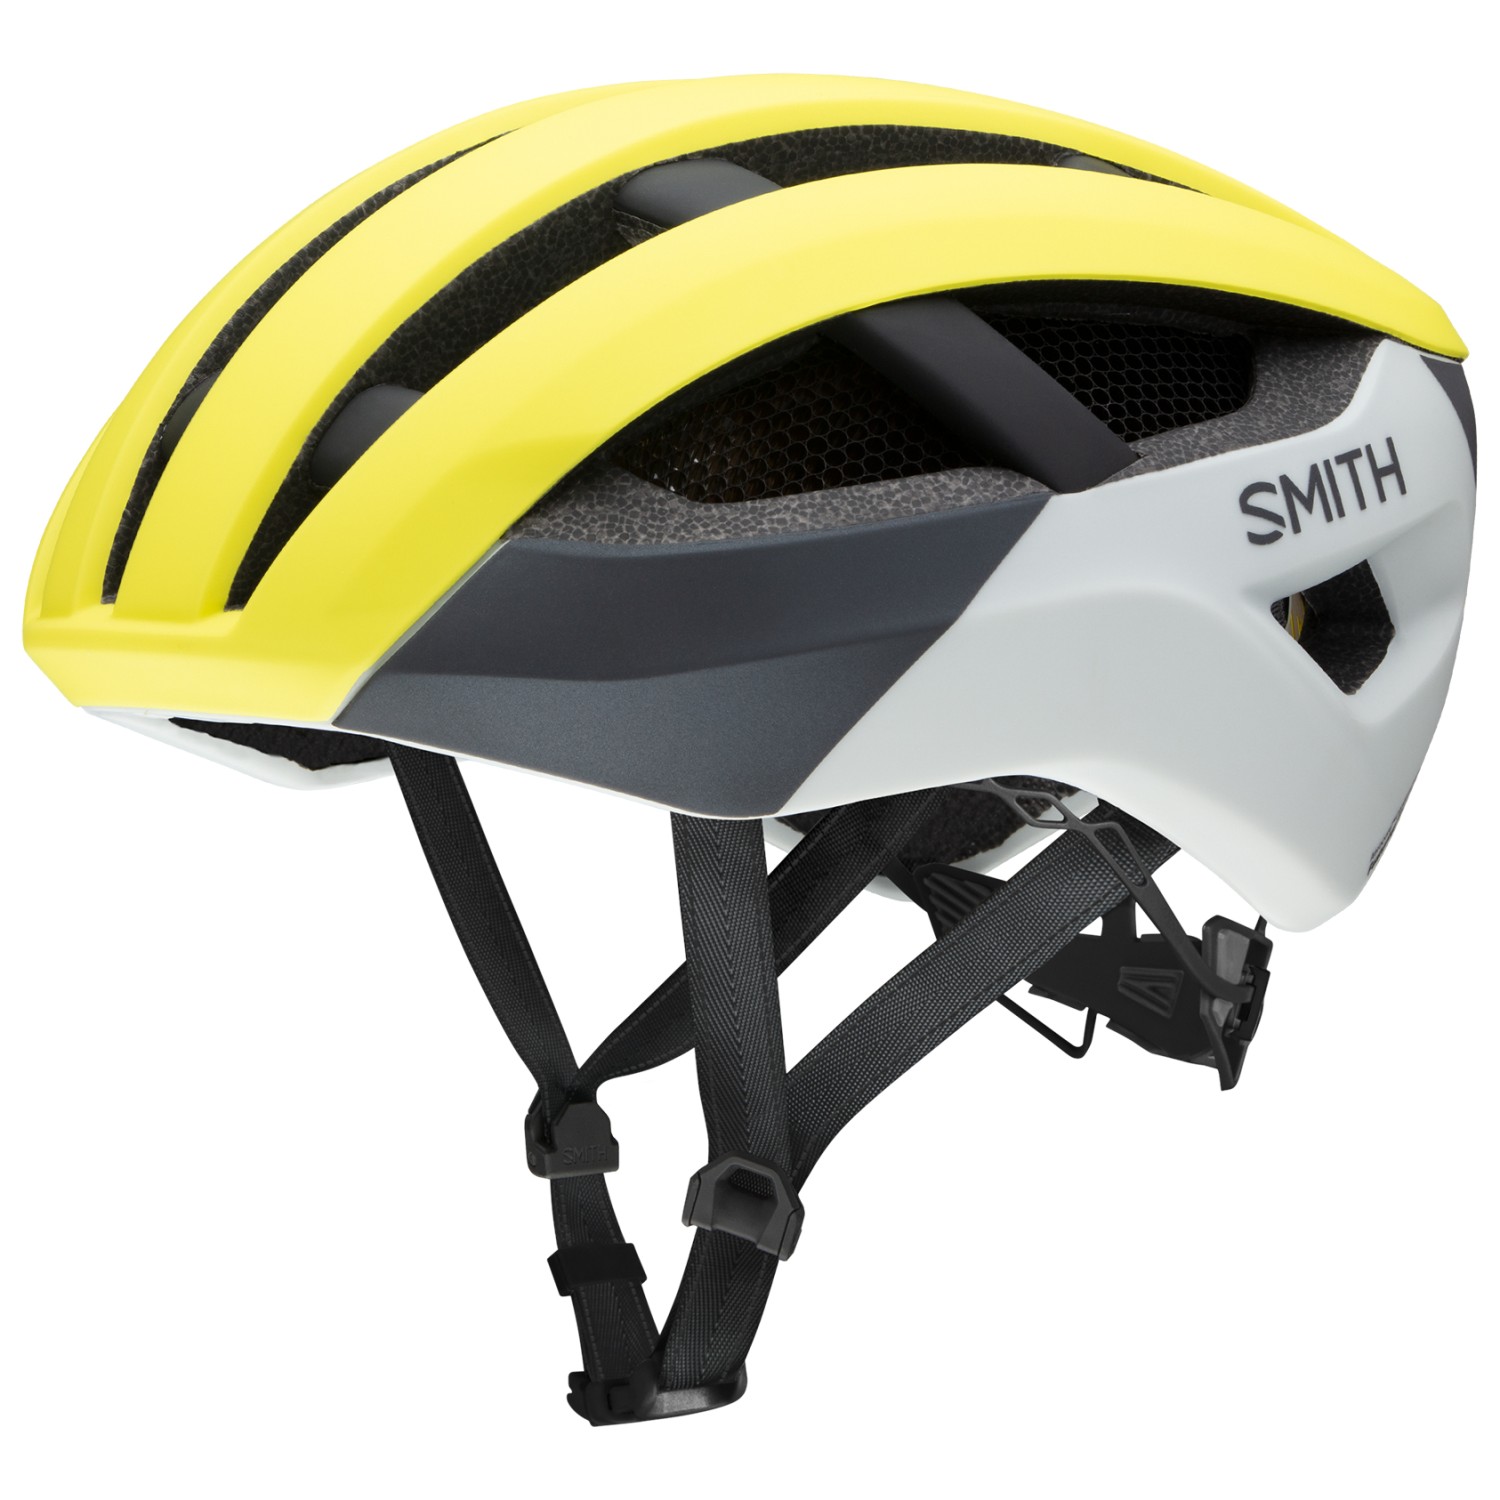 Велосипедный шлем Smith Network MIPS, цвет Matte Neon Yellow Viz шлем interceptor matte neon yellow black enduro mtb s m 55 61 см kali 02 21317136